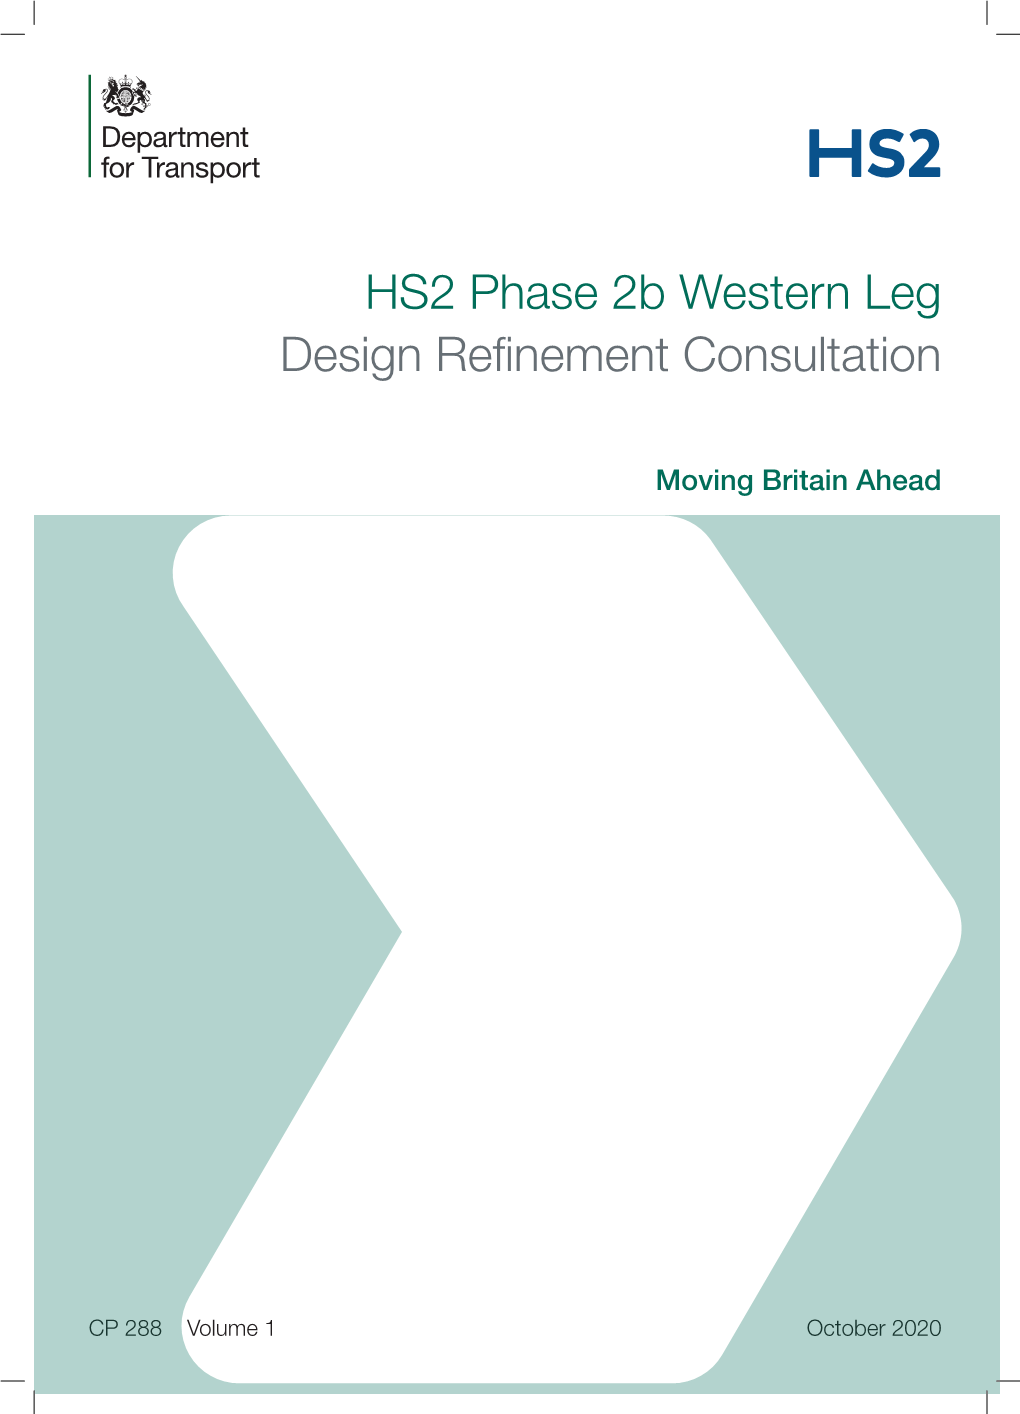 HS2 Phase 2B Western Leg Design Refinement Consultation Document